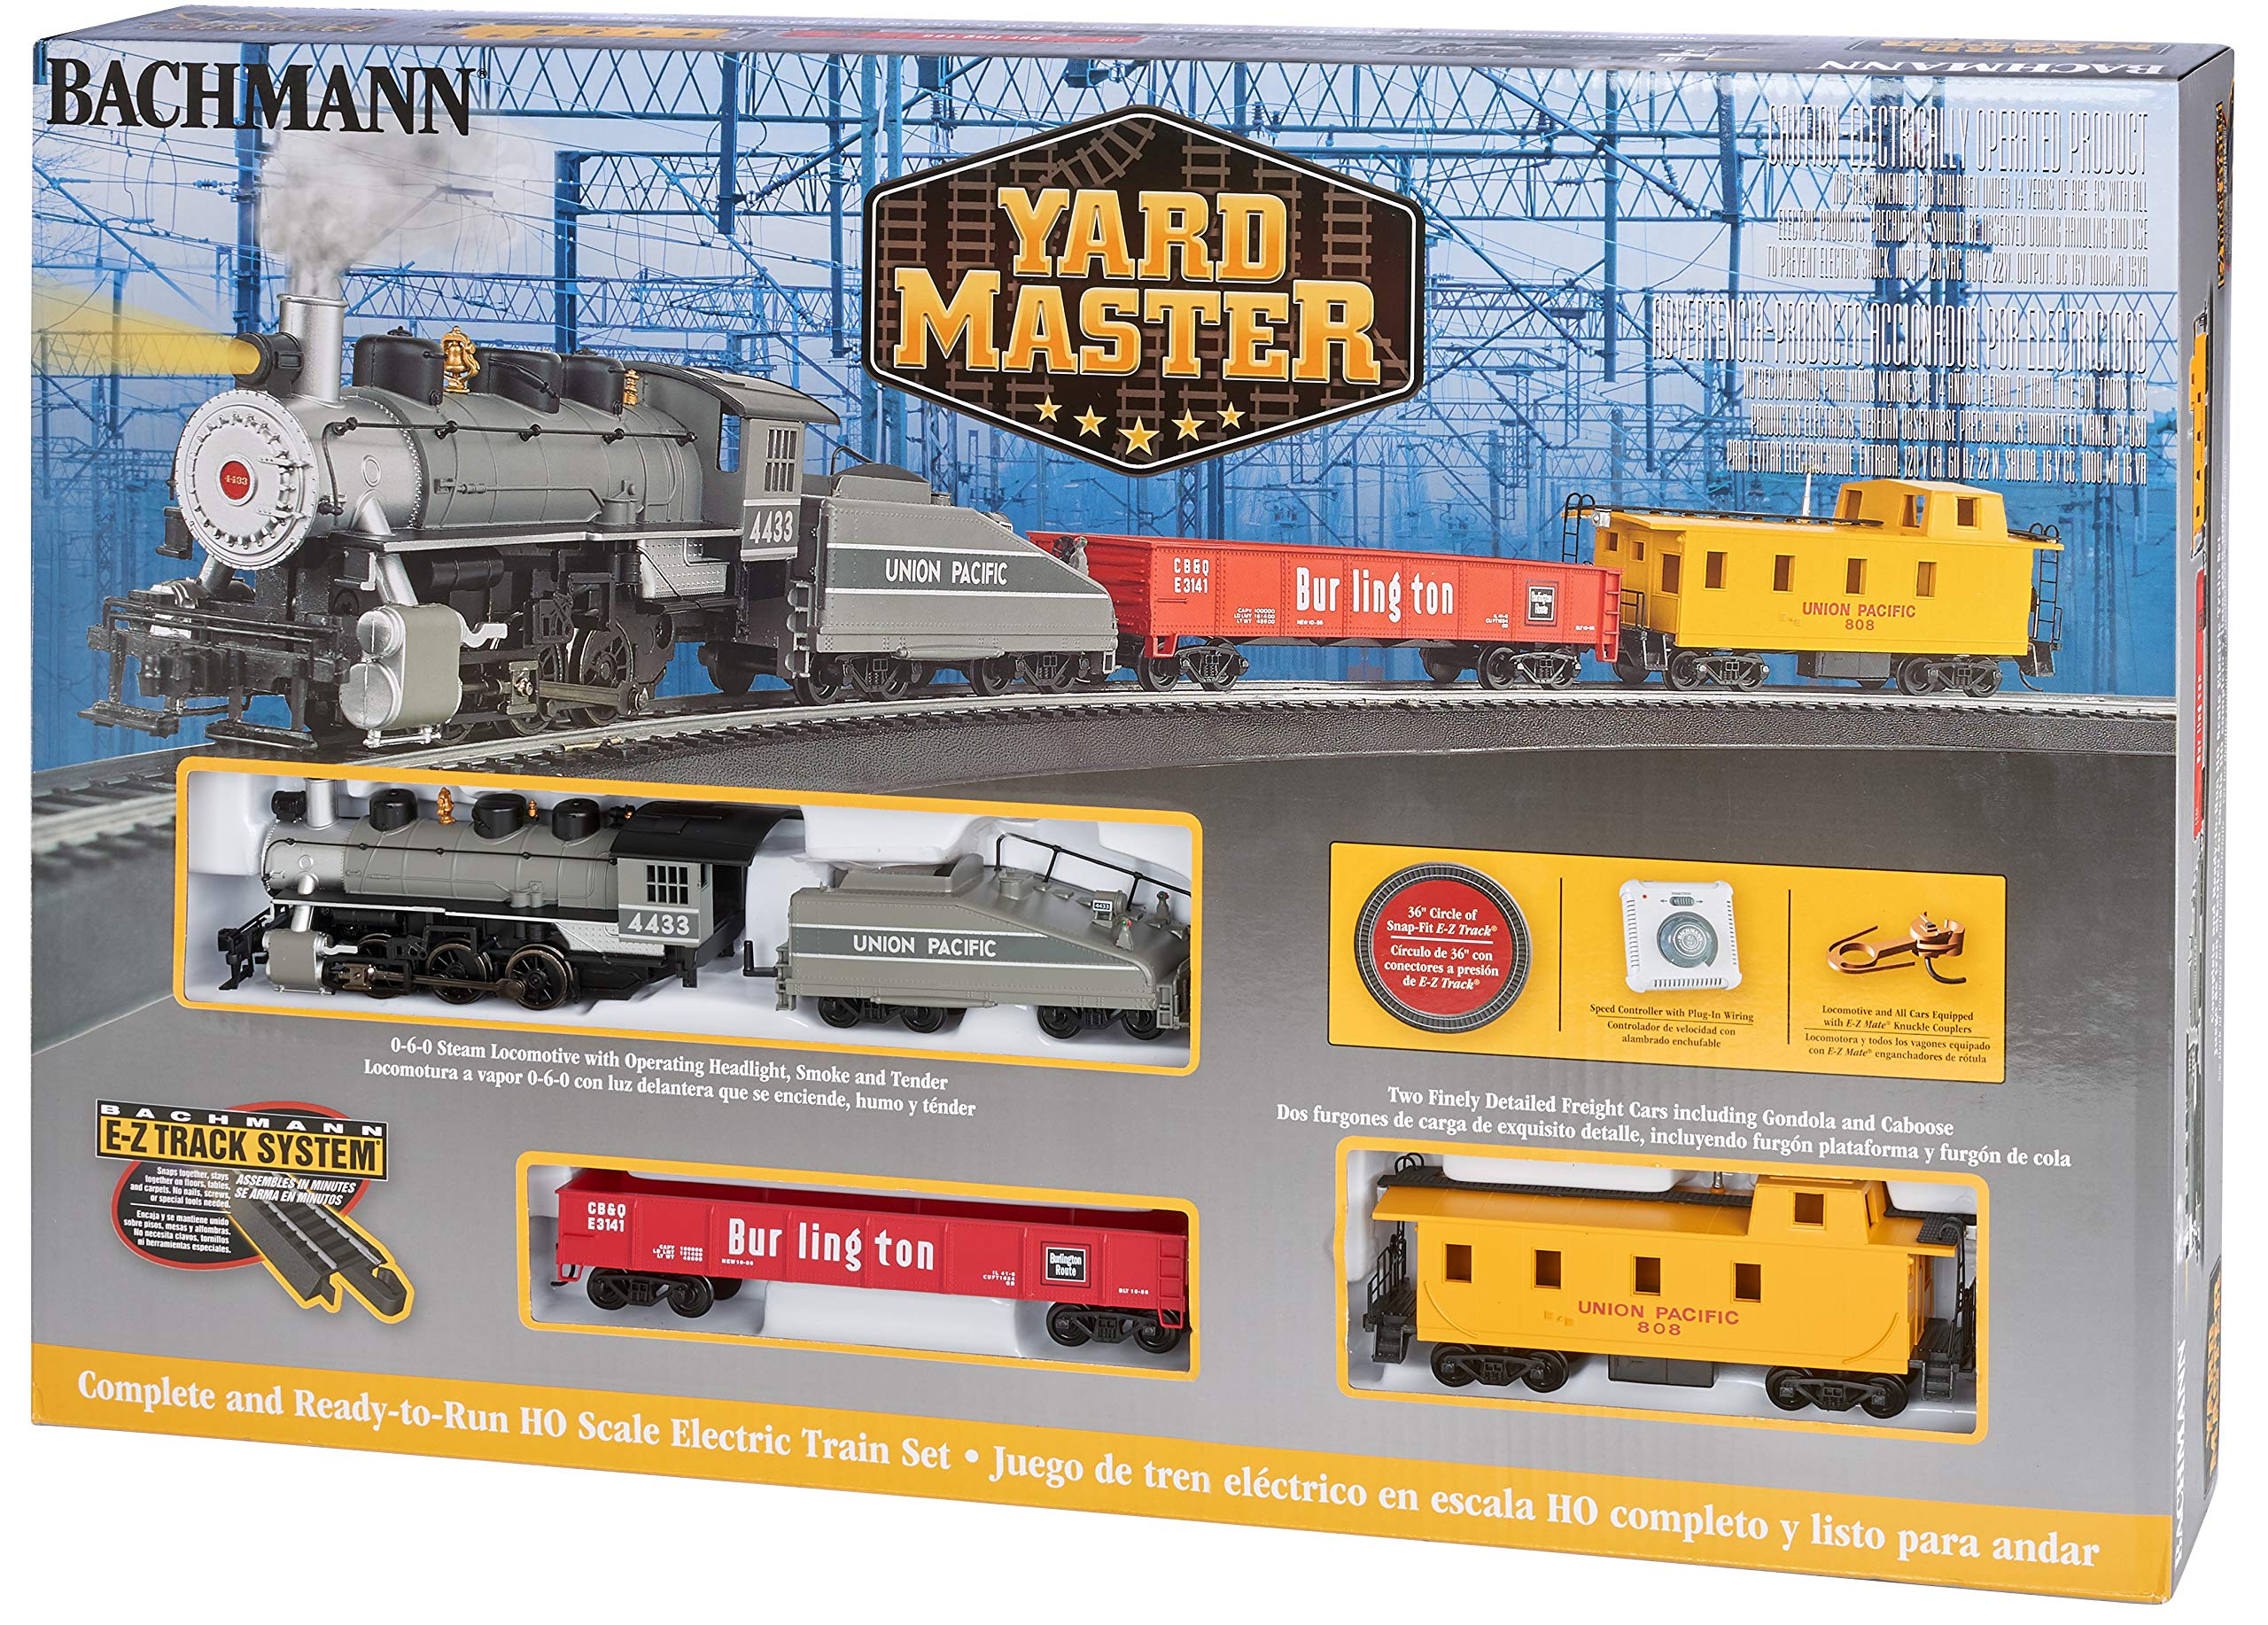 Bachmann Trains - Yard Master - Ready to Run Electric Train Set - HO Scale